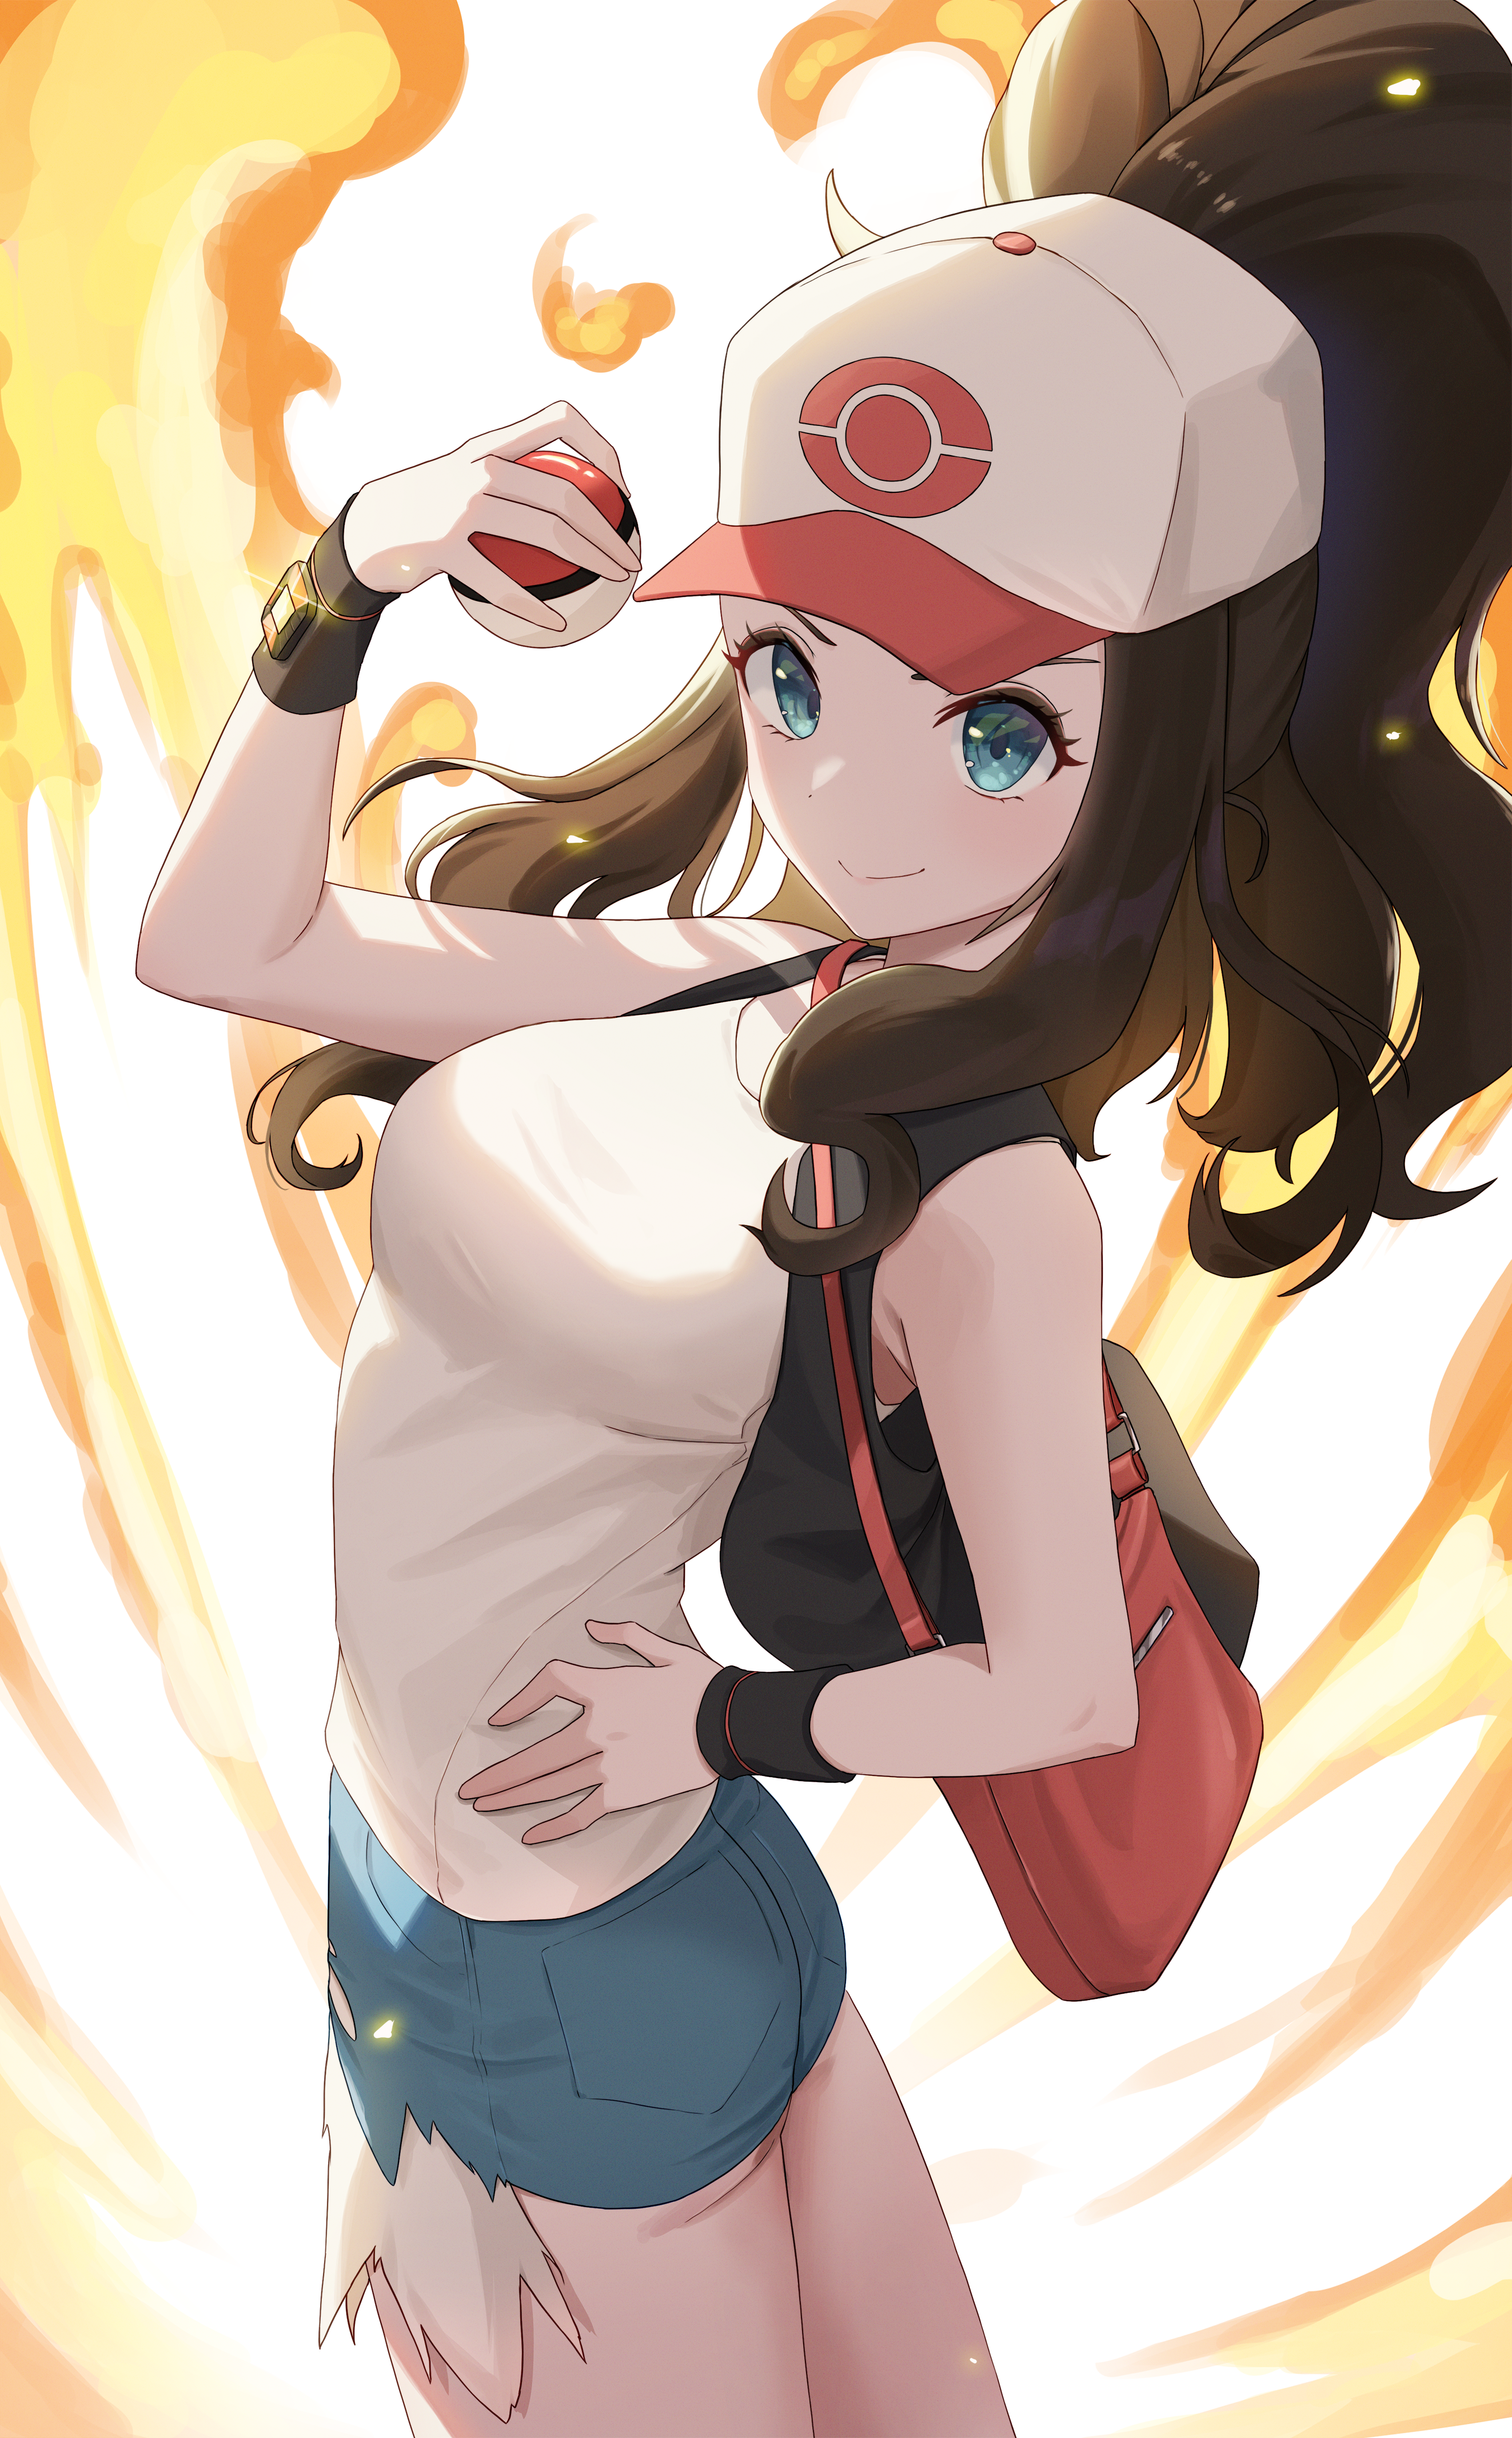 Anime Anime Girls Digital Art Artwork 2D Pixiv Looking At Viewer Pokemon Hat Poke Ball Purse Hands O 2645x4264